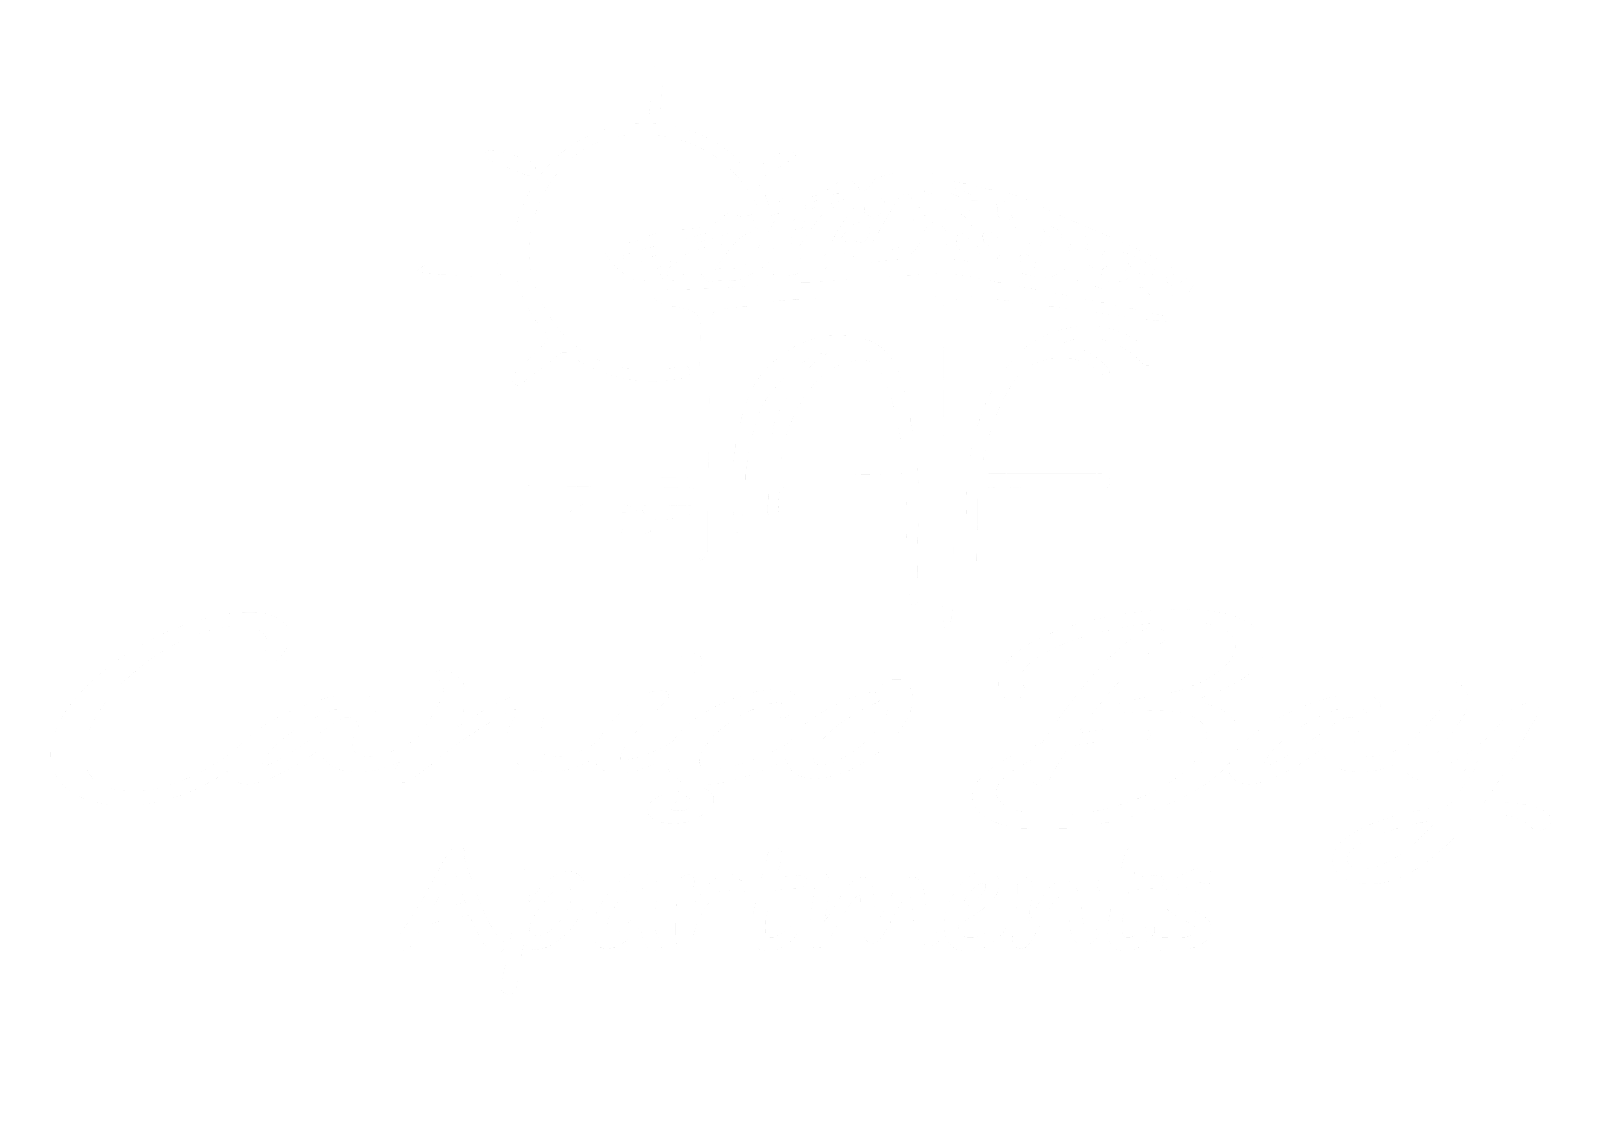 Habitaciones - Caniço Bay Apartments